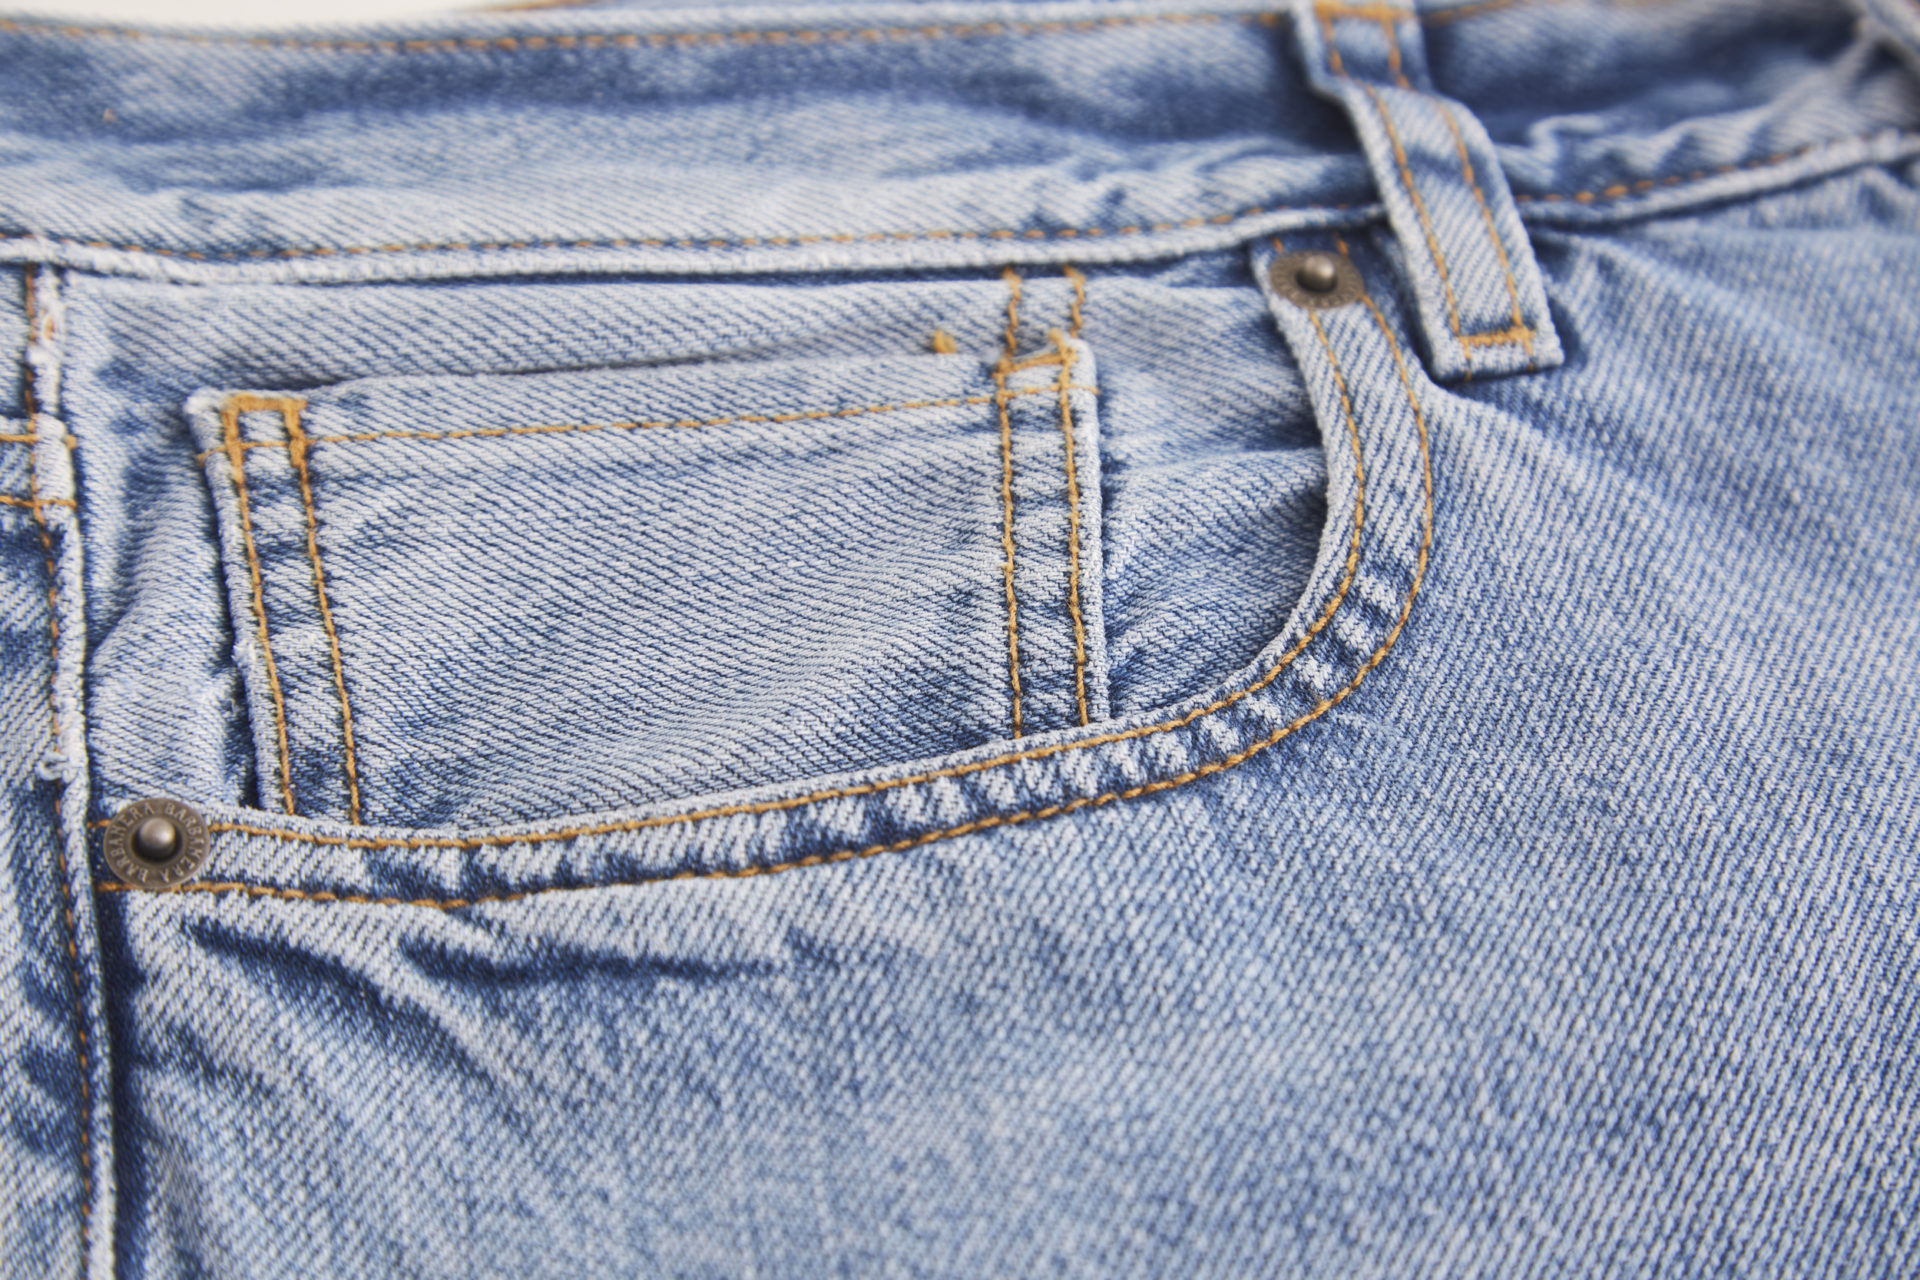 https://www.barbanerastyle.com/wp-content/uploads/2020/07/bandito-slim-fit-selvedge-jeans-light-05.jpg